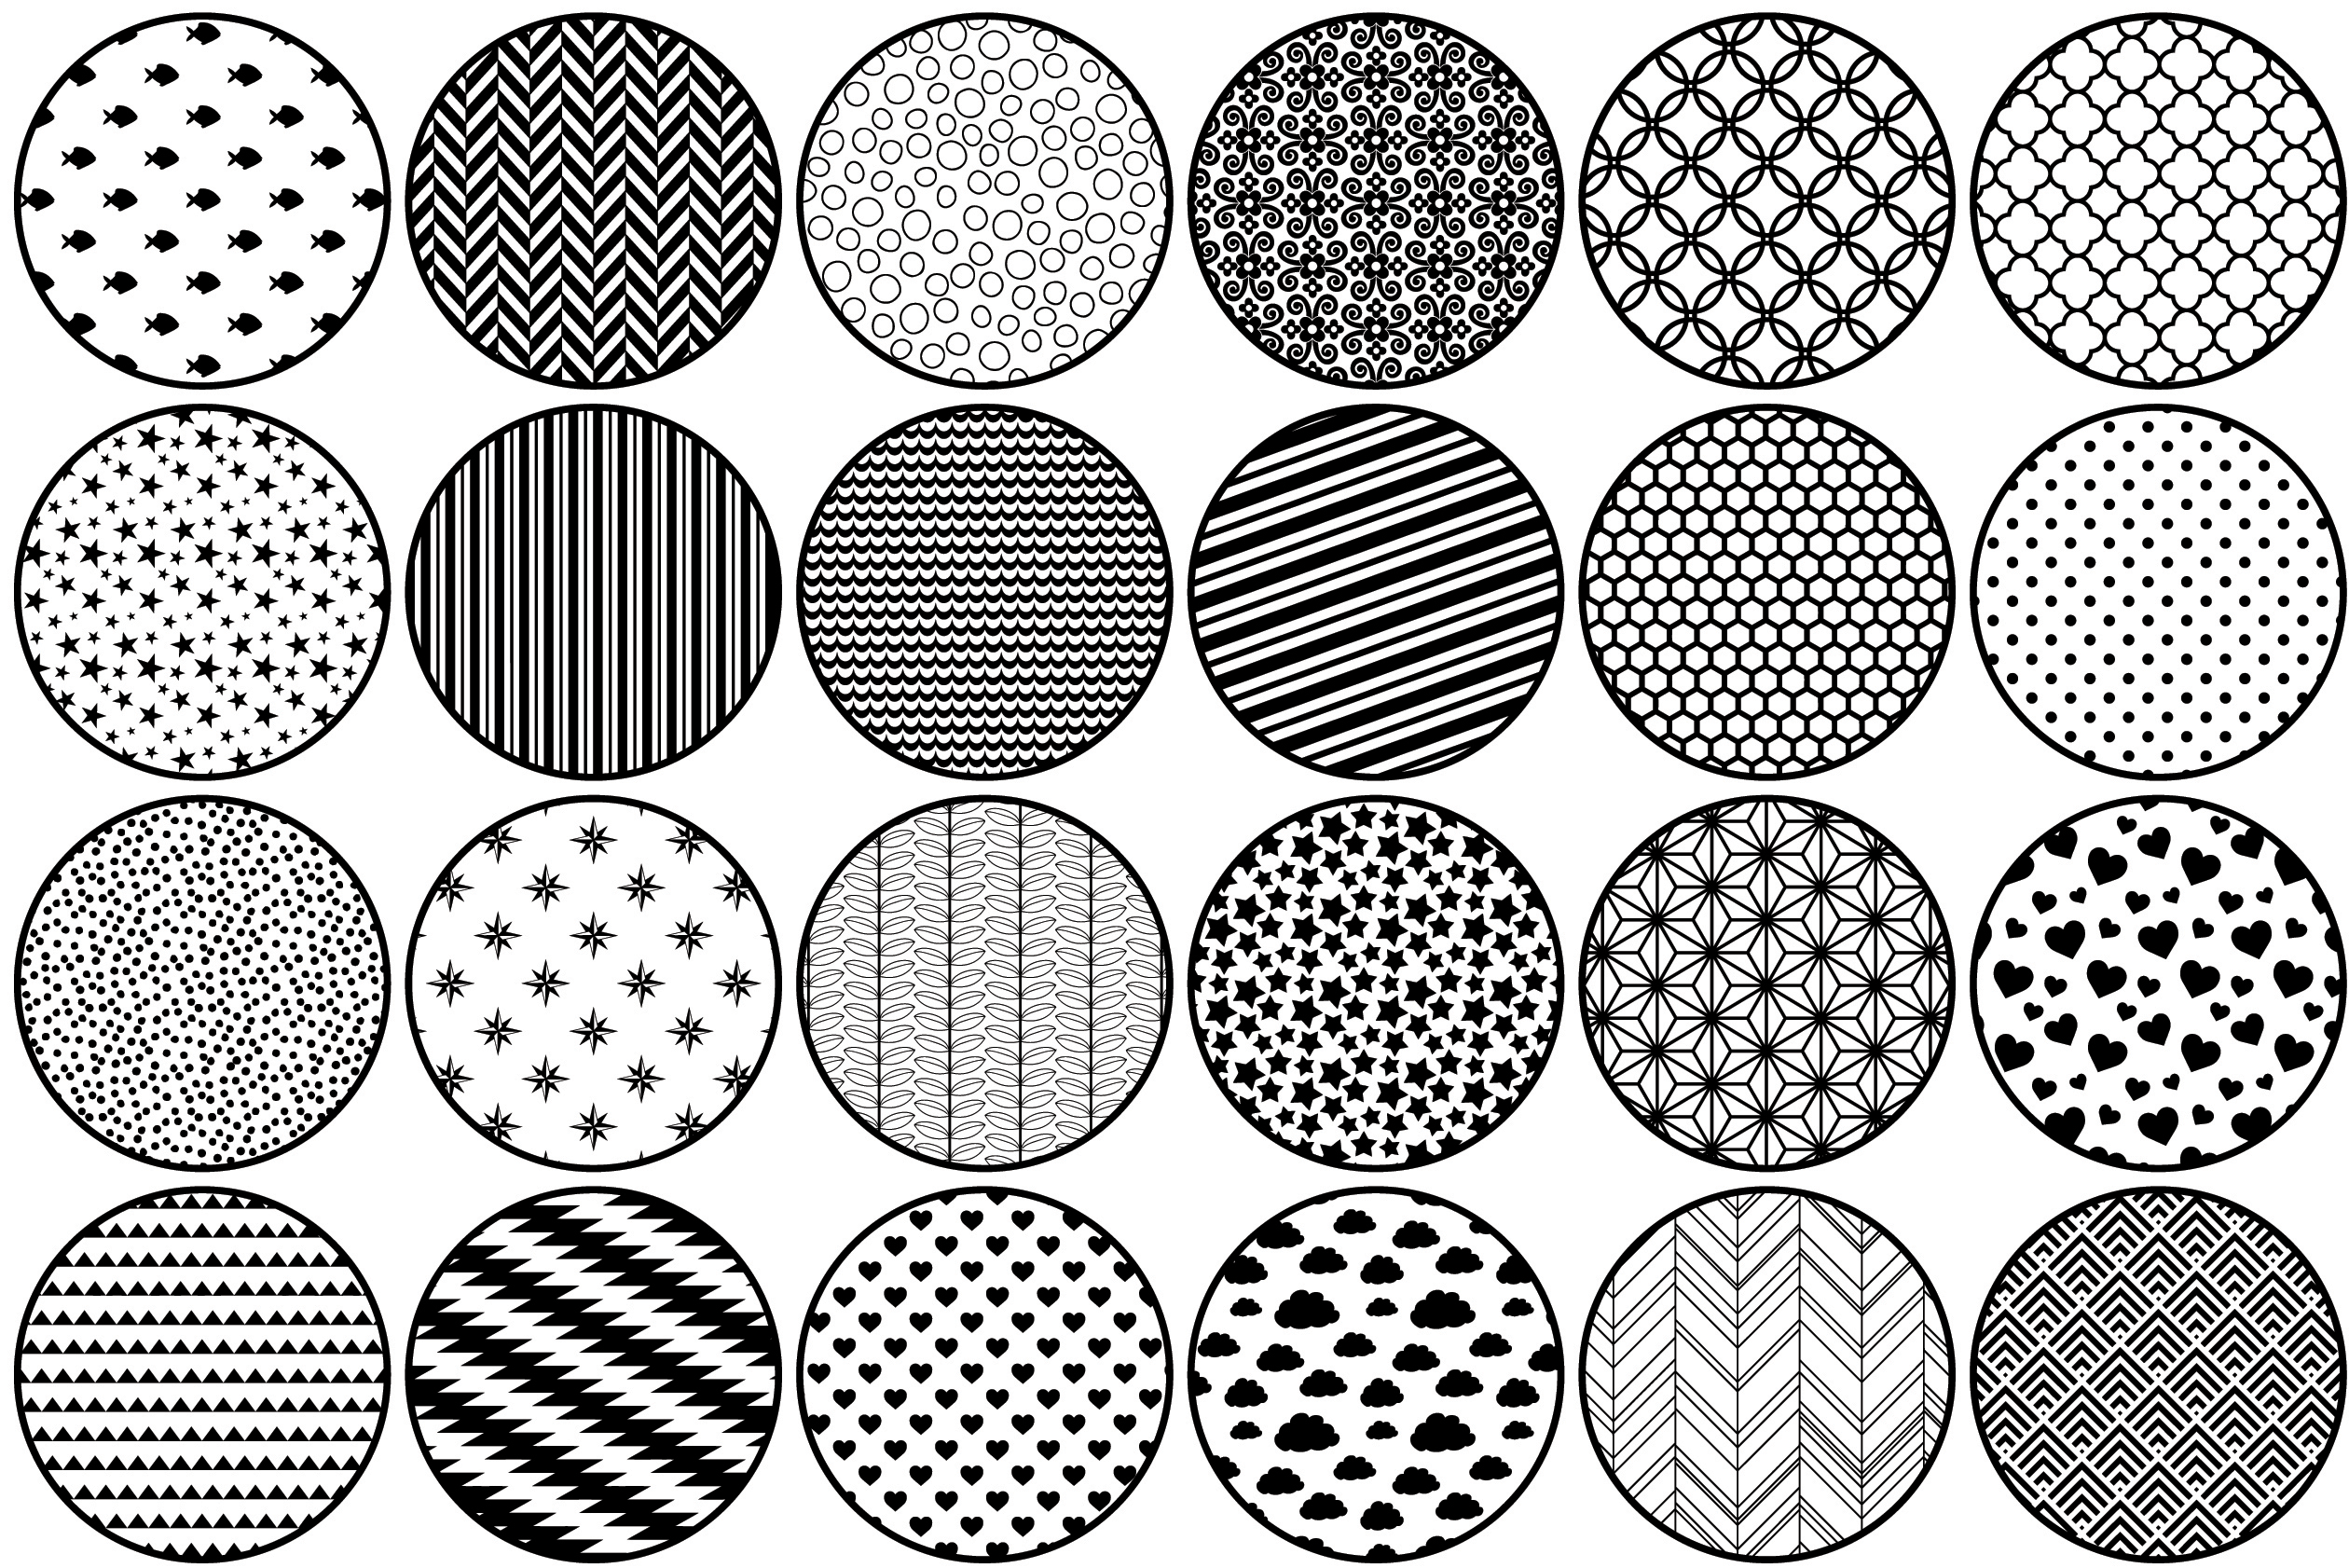 Download 75 Circle Patterns Svg Bundle Background Pattern Svg Cut Files By Doodle Cloud Studio Thehungryjpeg Com